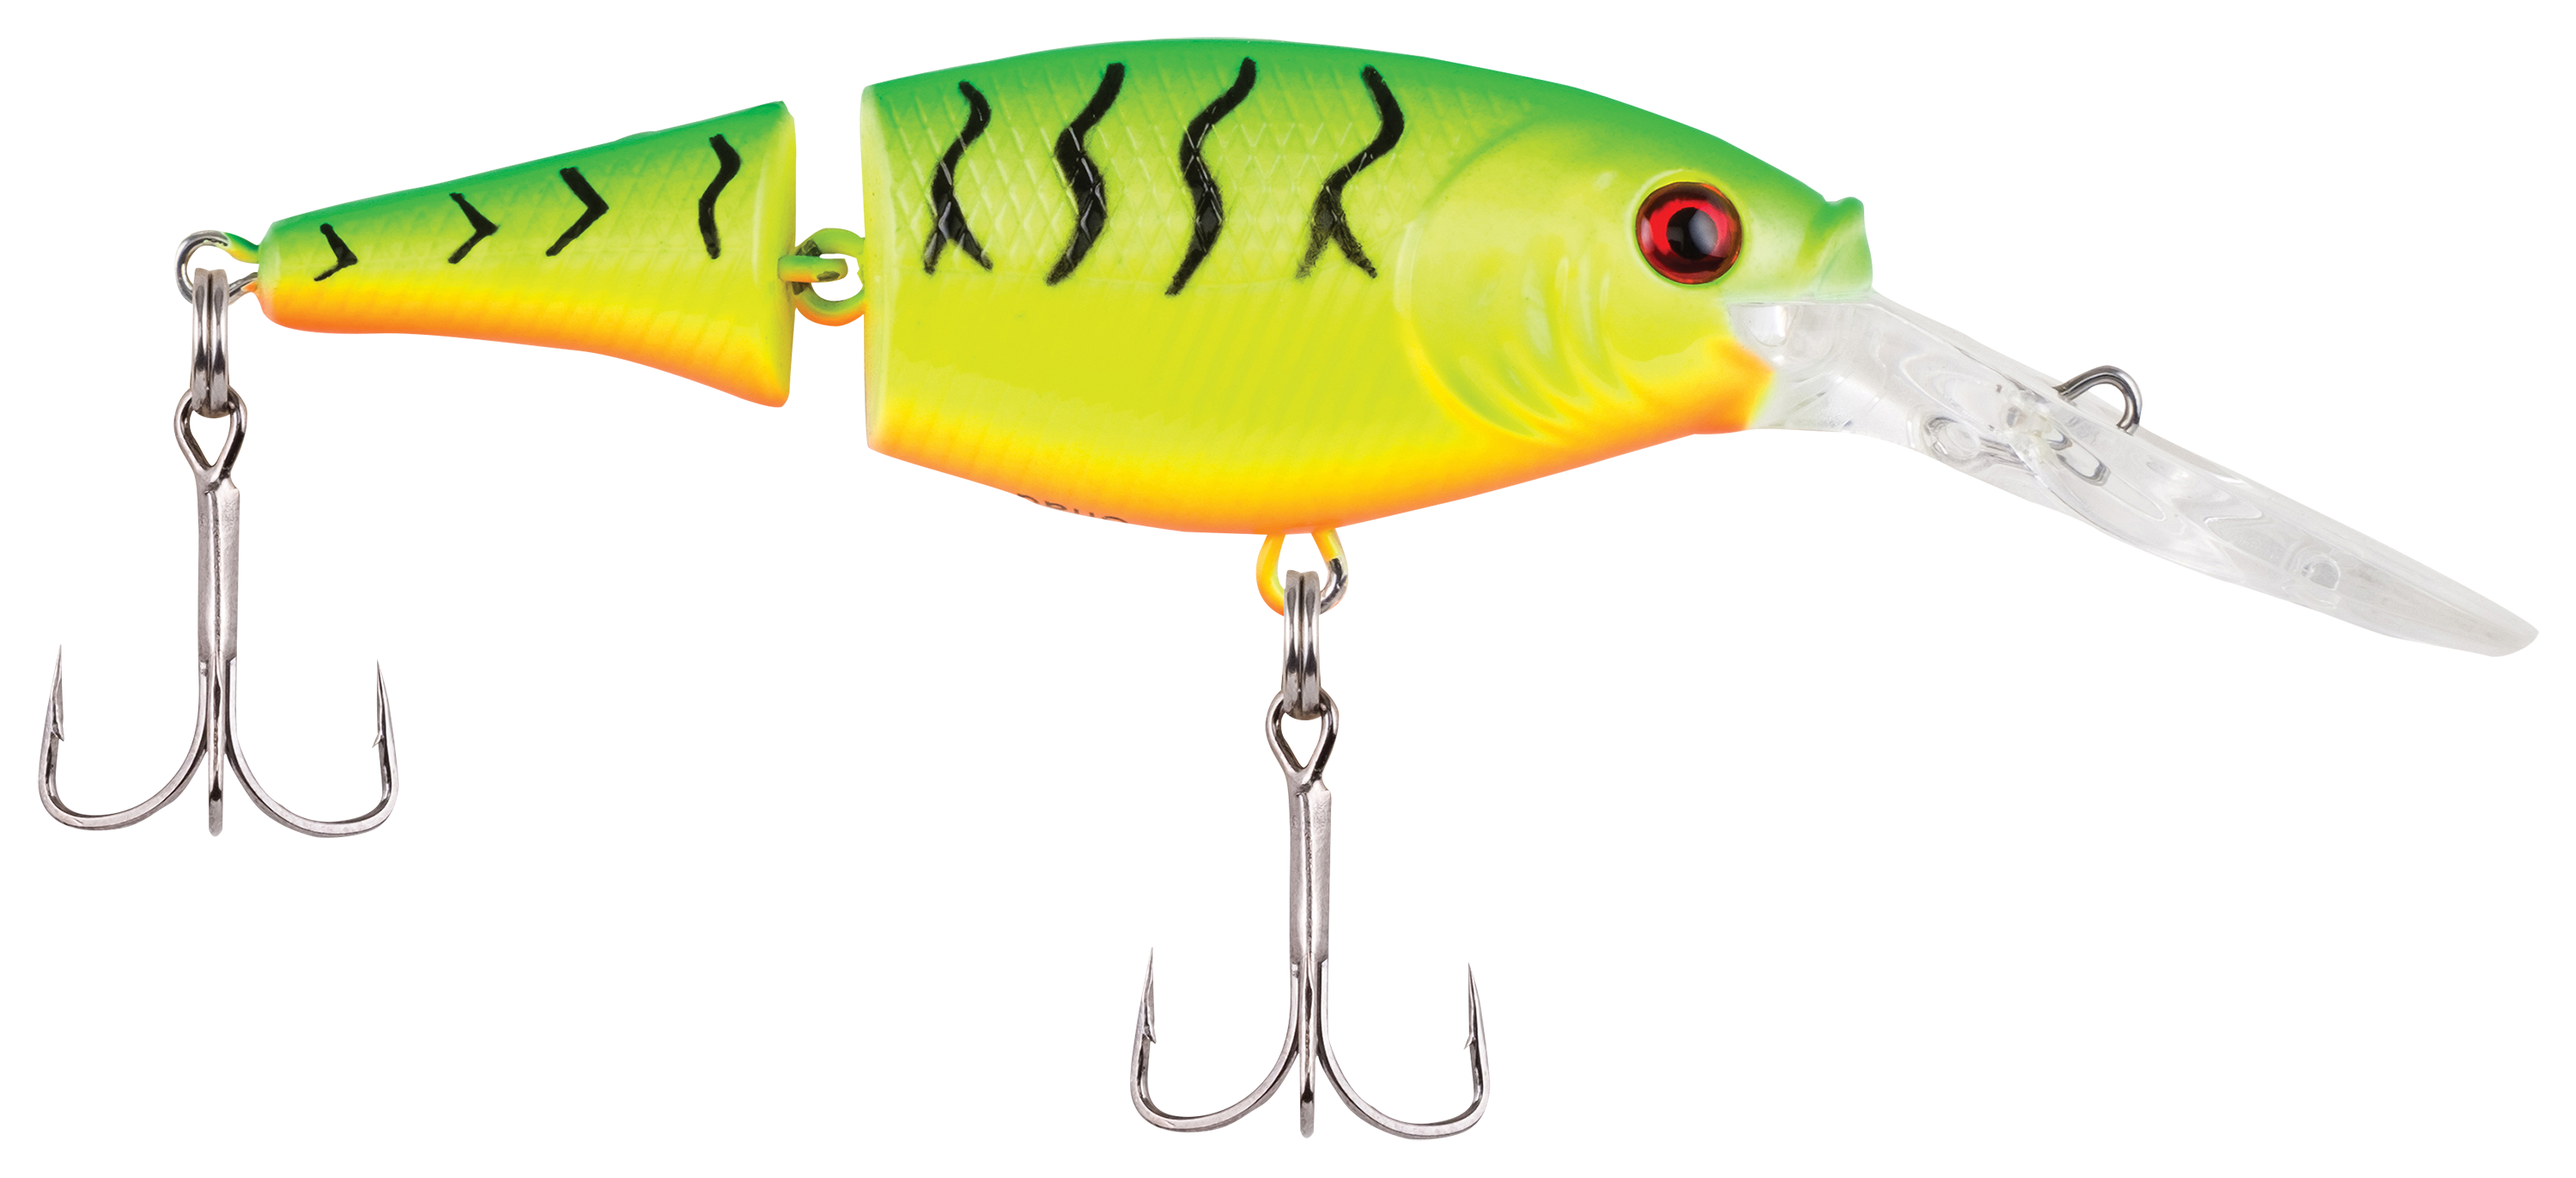 Berkley Flicker Shad Jointed Fishing Lure, HD Yellow Perch, 1/3 oz